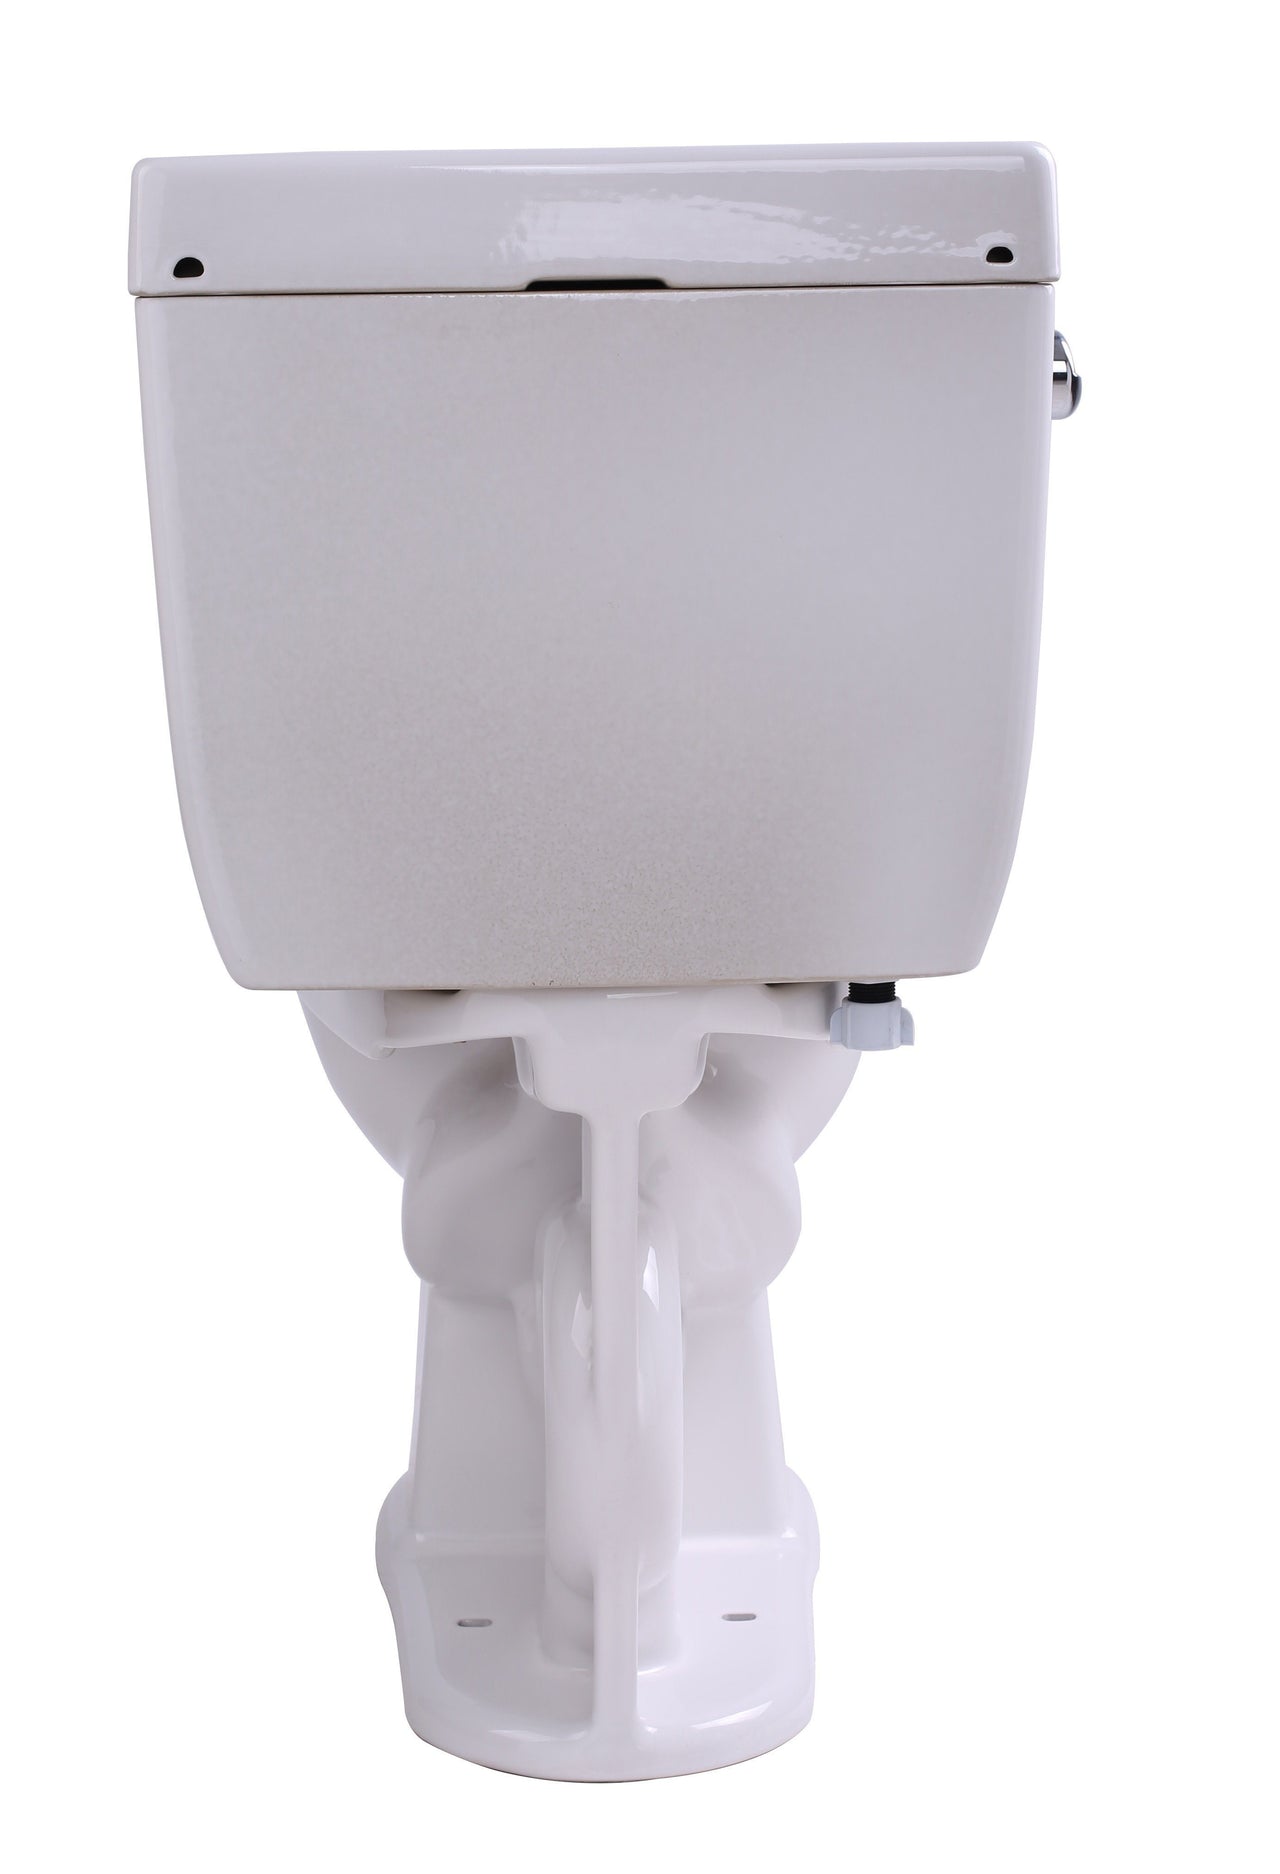 ANZZI Talos T1-AZ065 Toilets Toilets ANZZI 